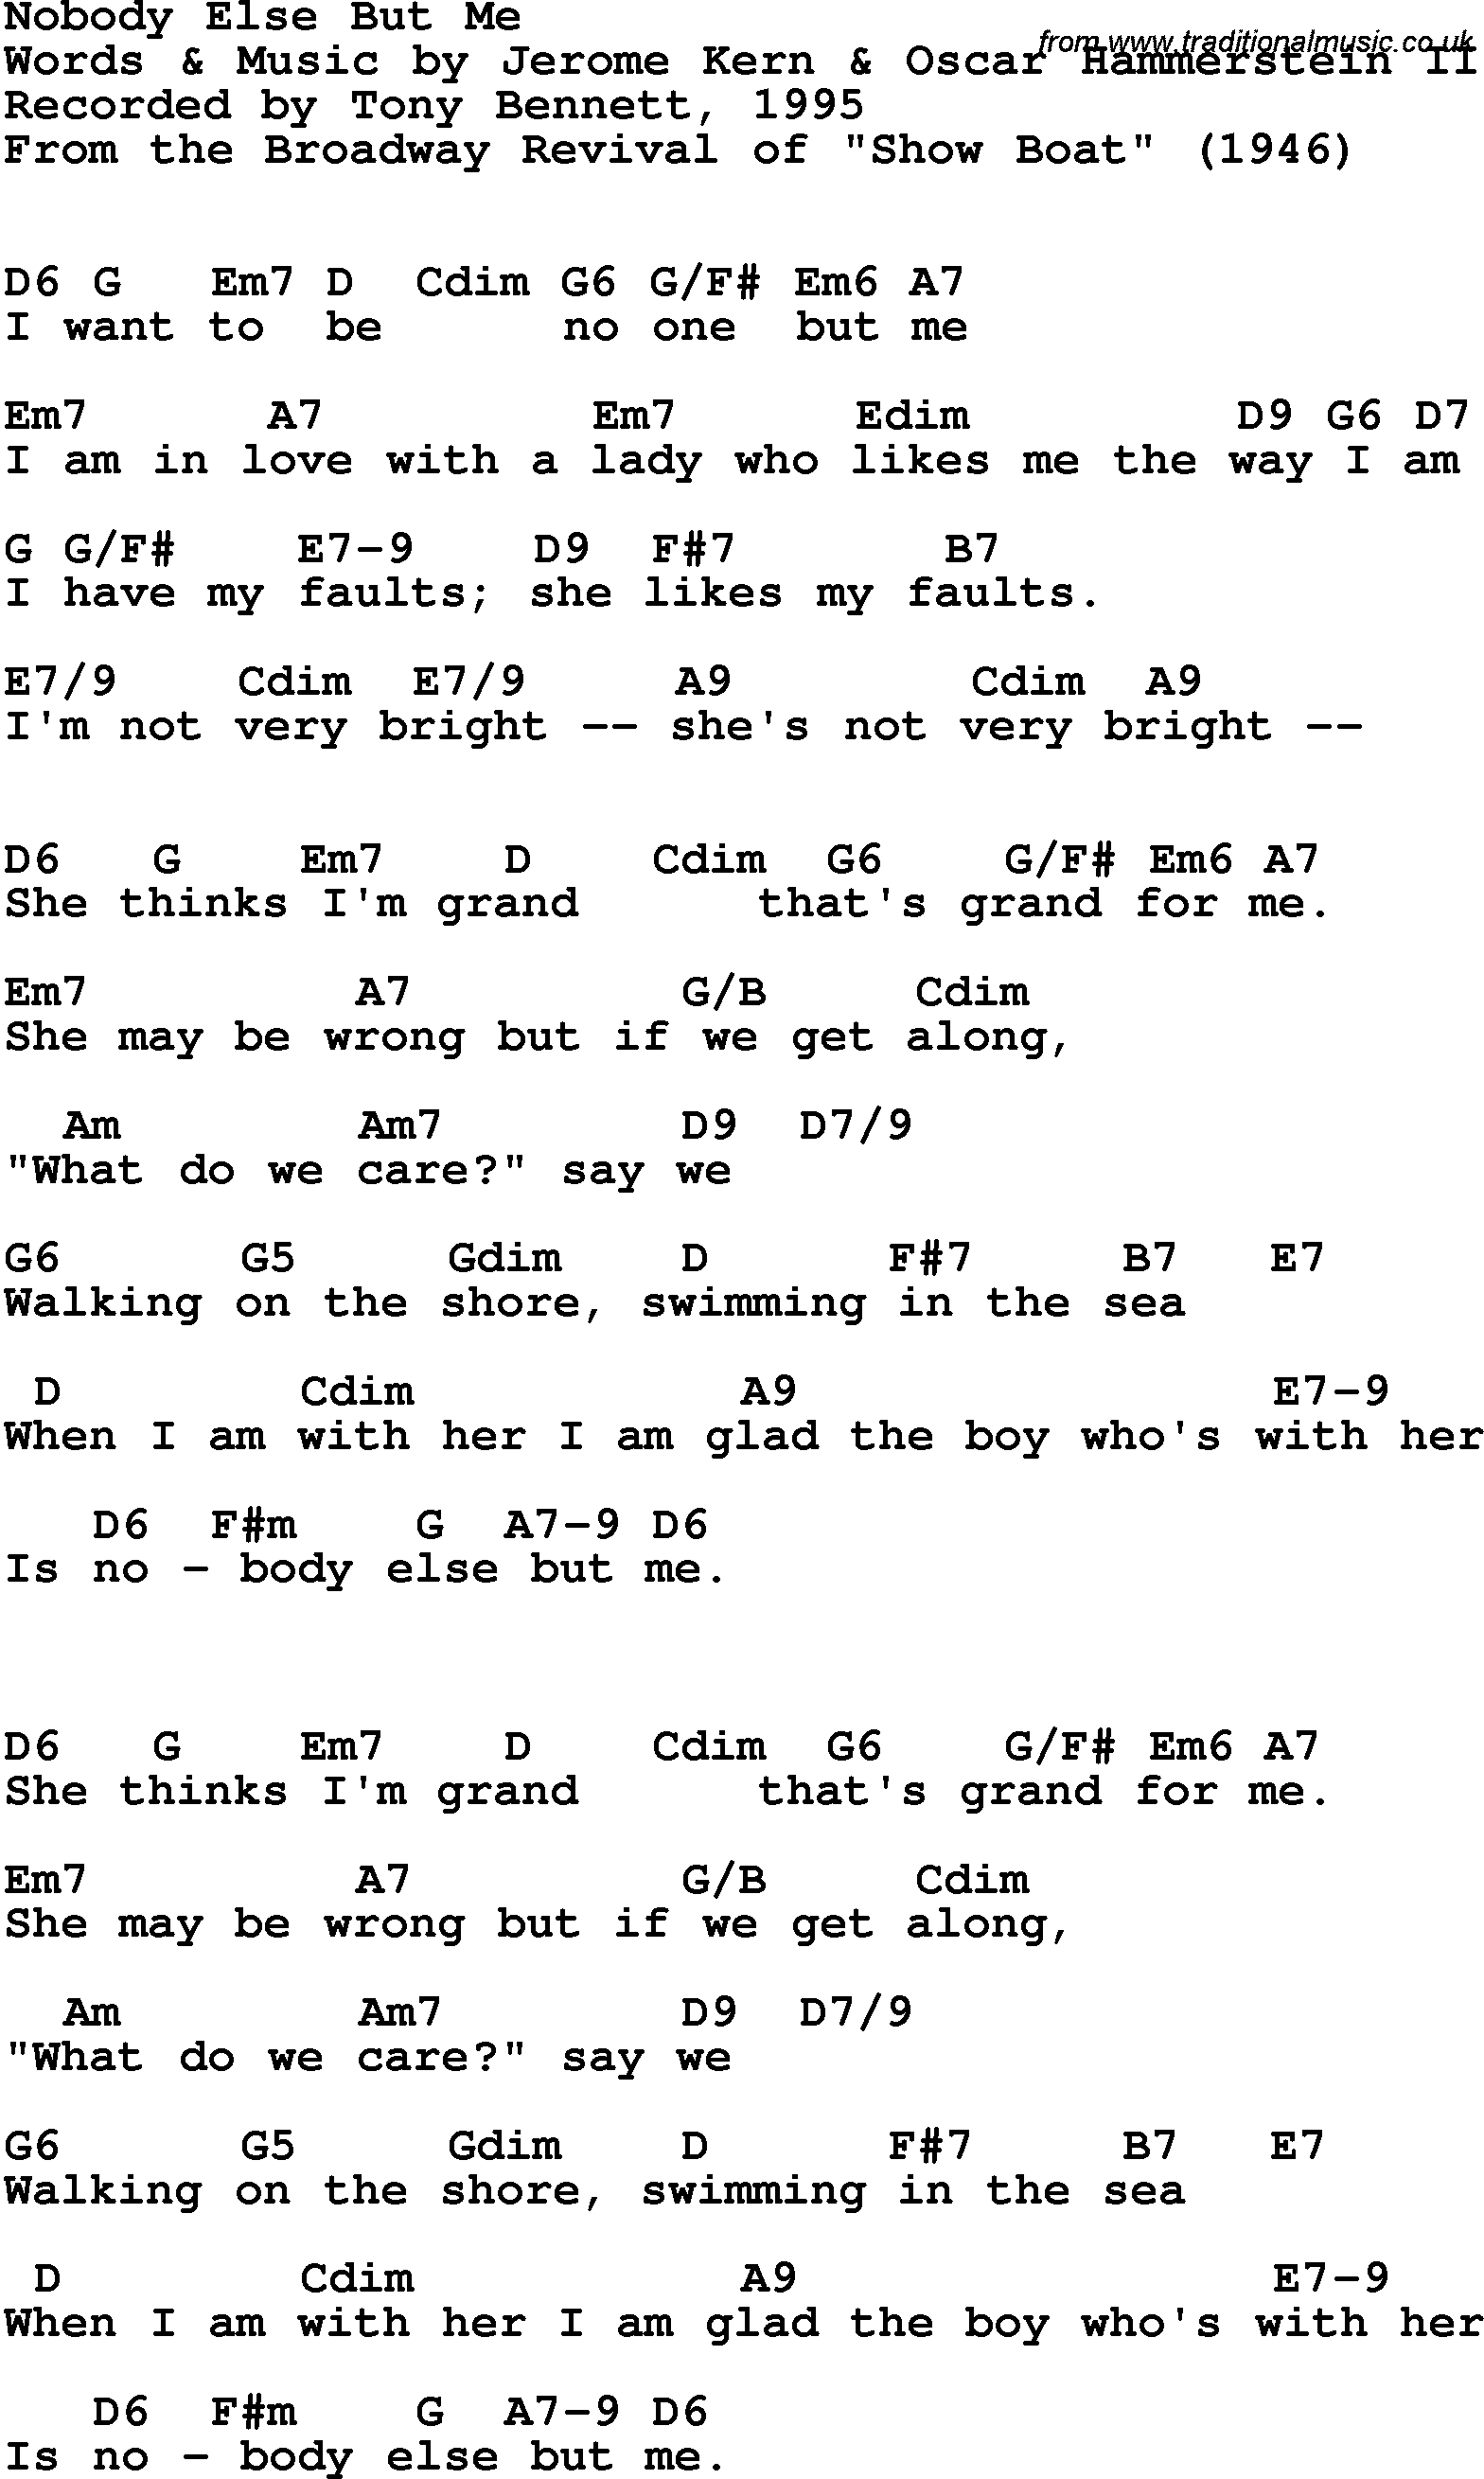 Song Lyrics with guitar chords for Nobody Else But Me - Tony Bennett, 1995